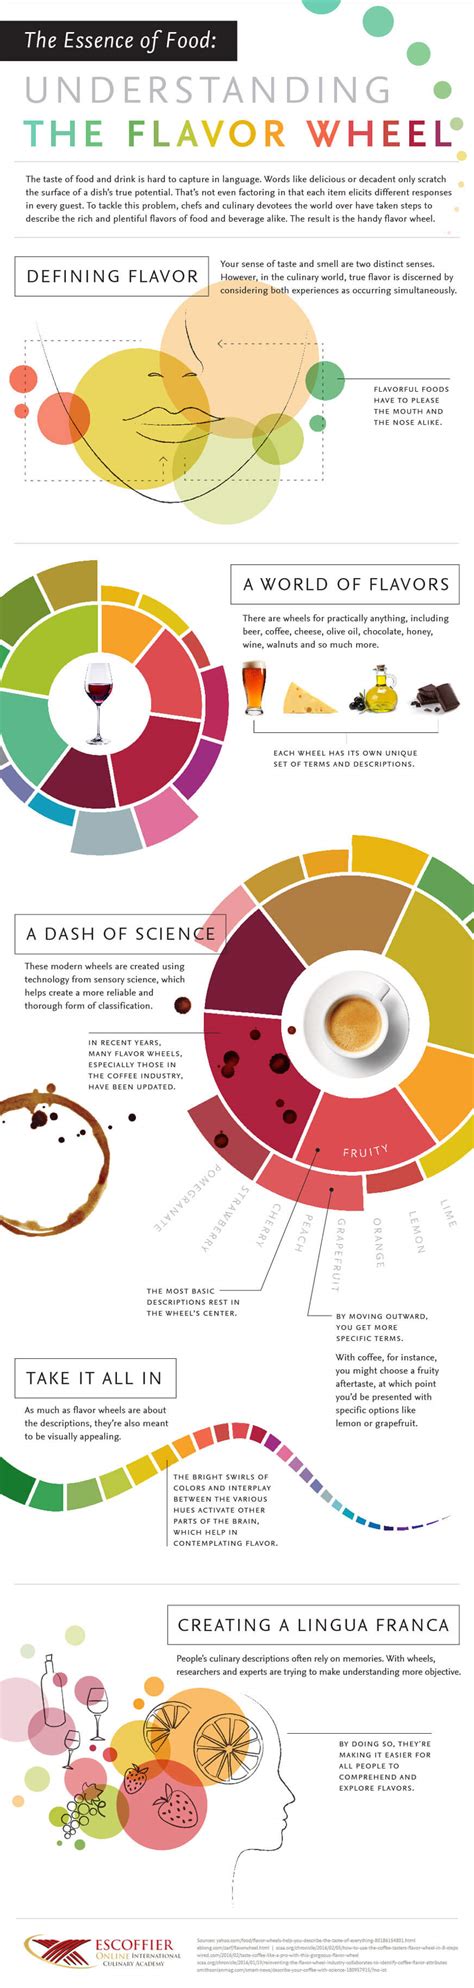 The Essence Of Food Understanding The Flavor Wheel Infographic